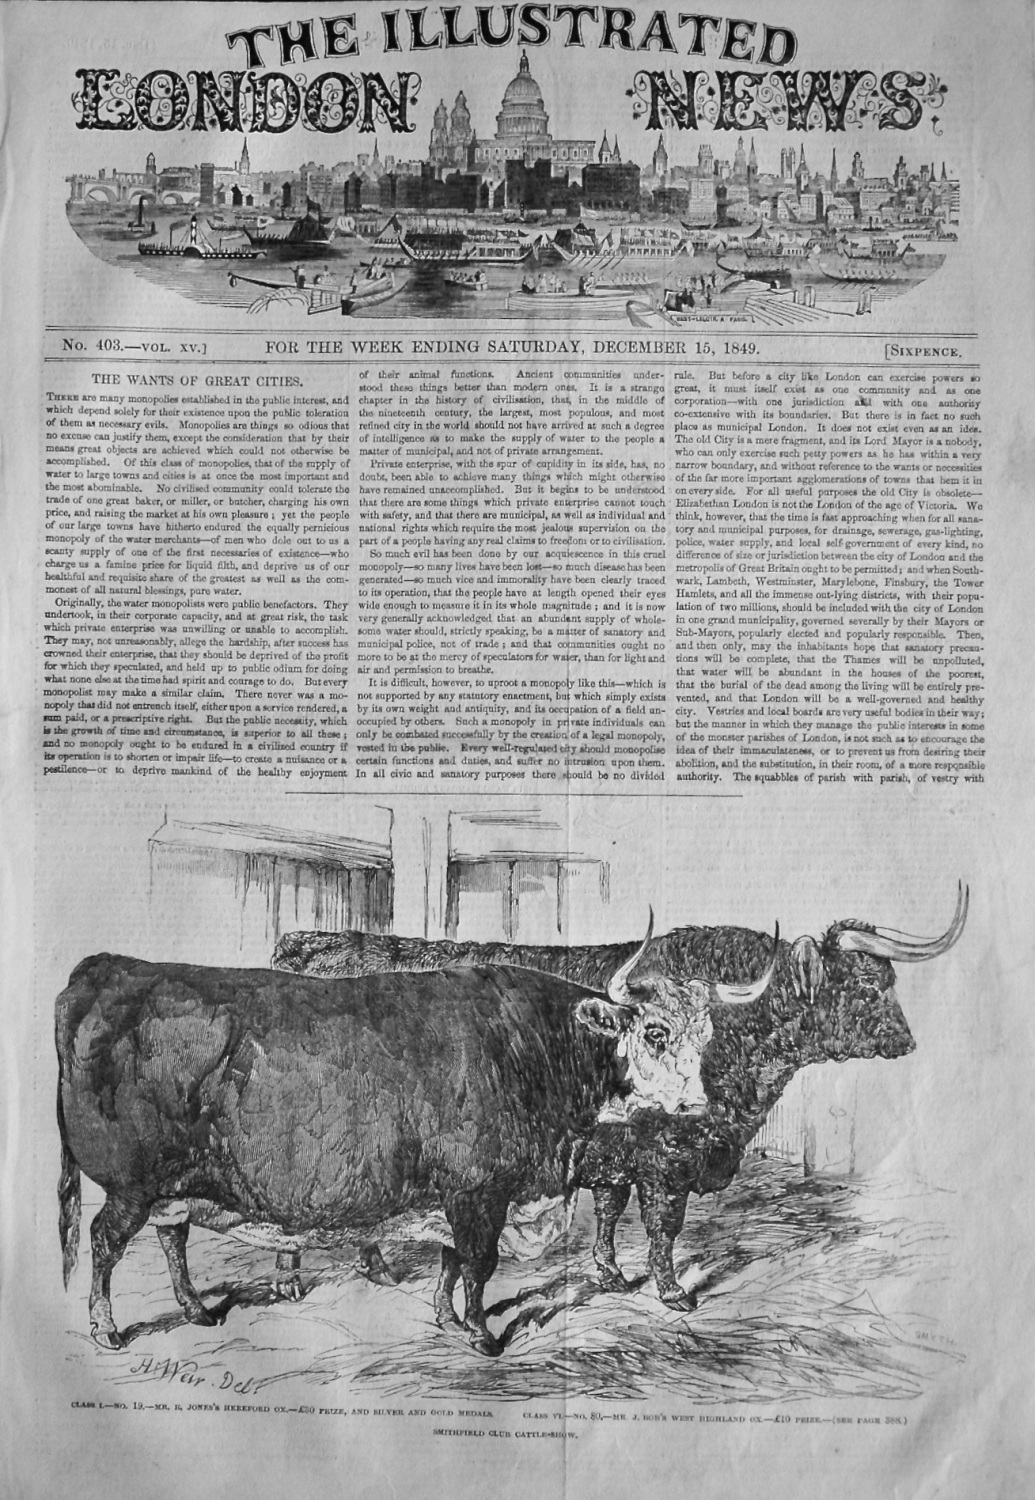 Illustrated London News. December 15th, 1849.